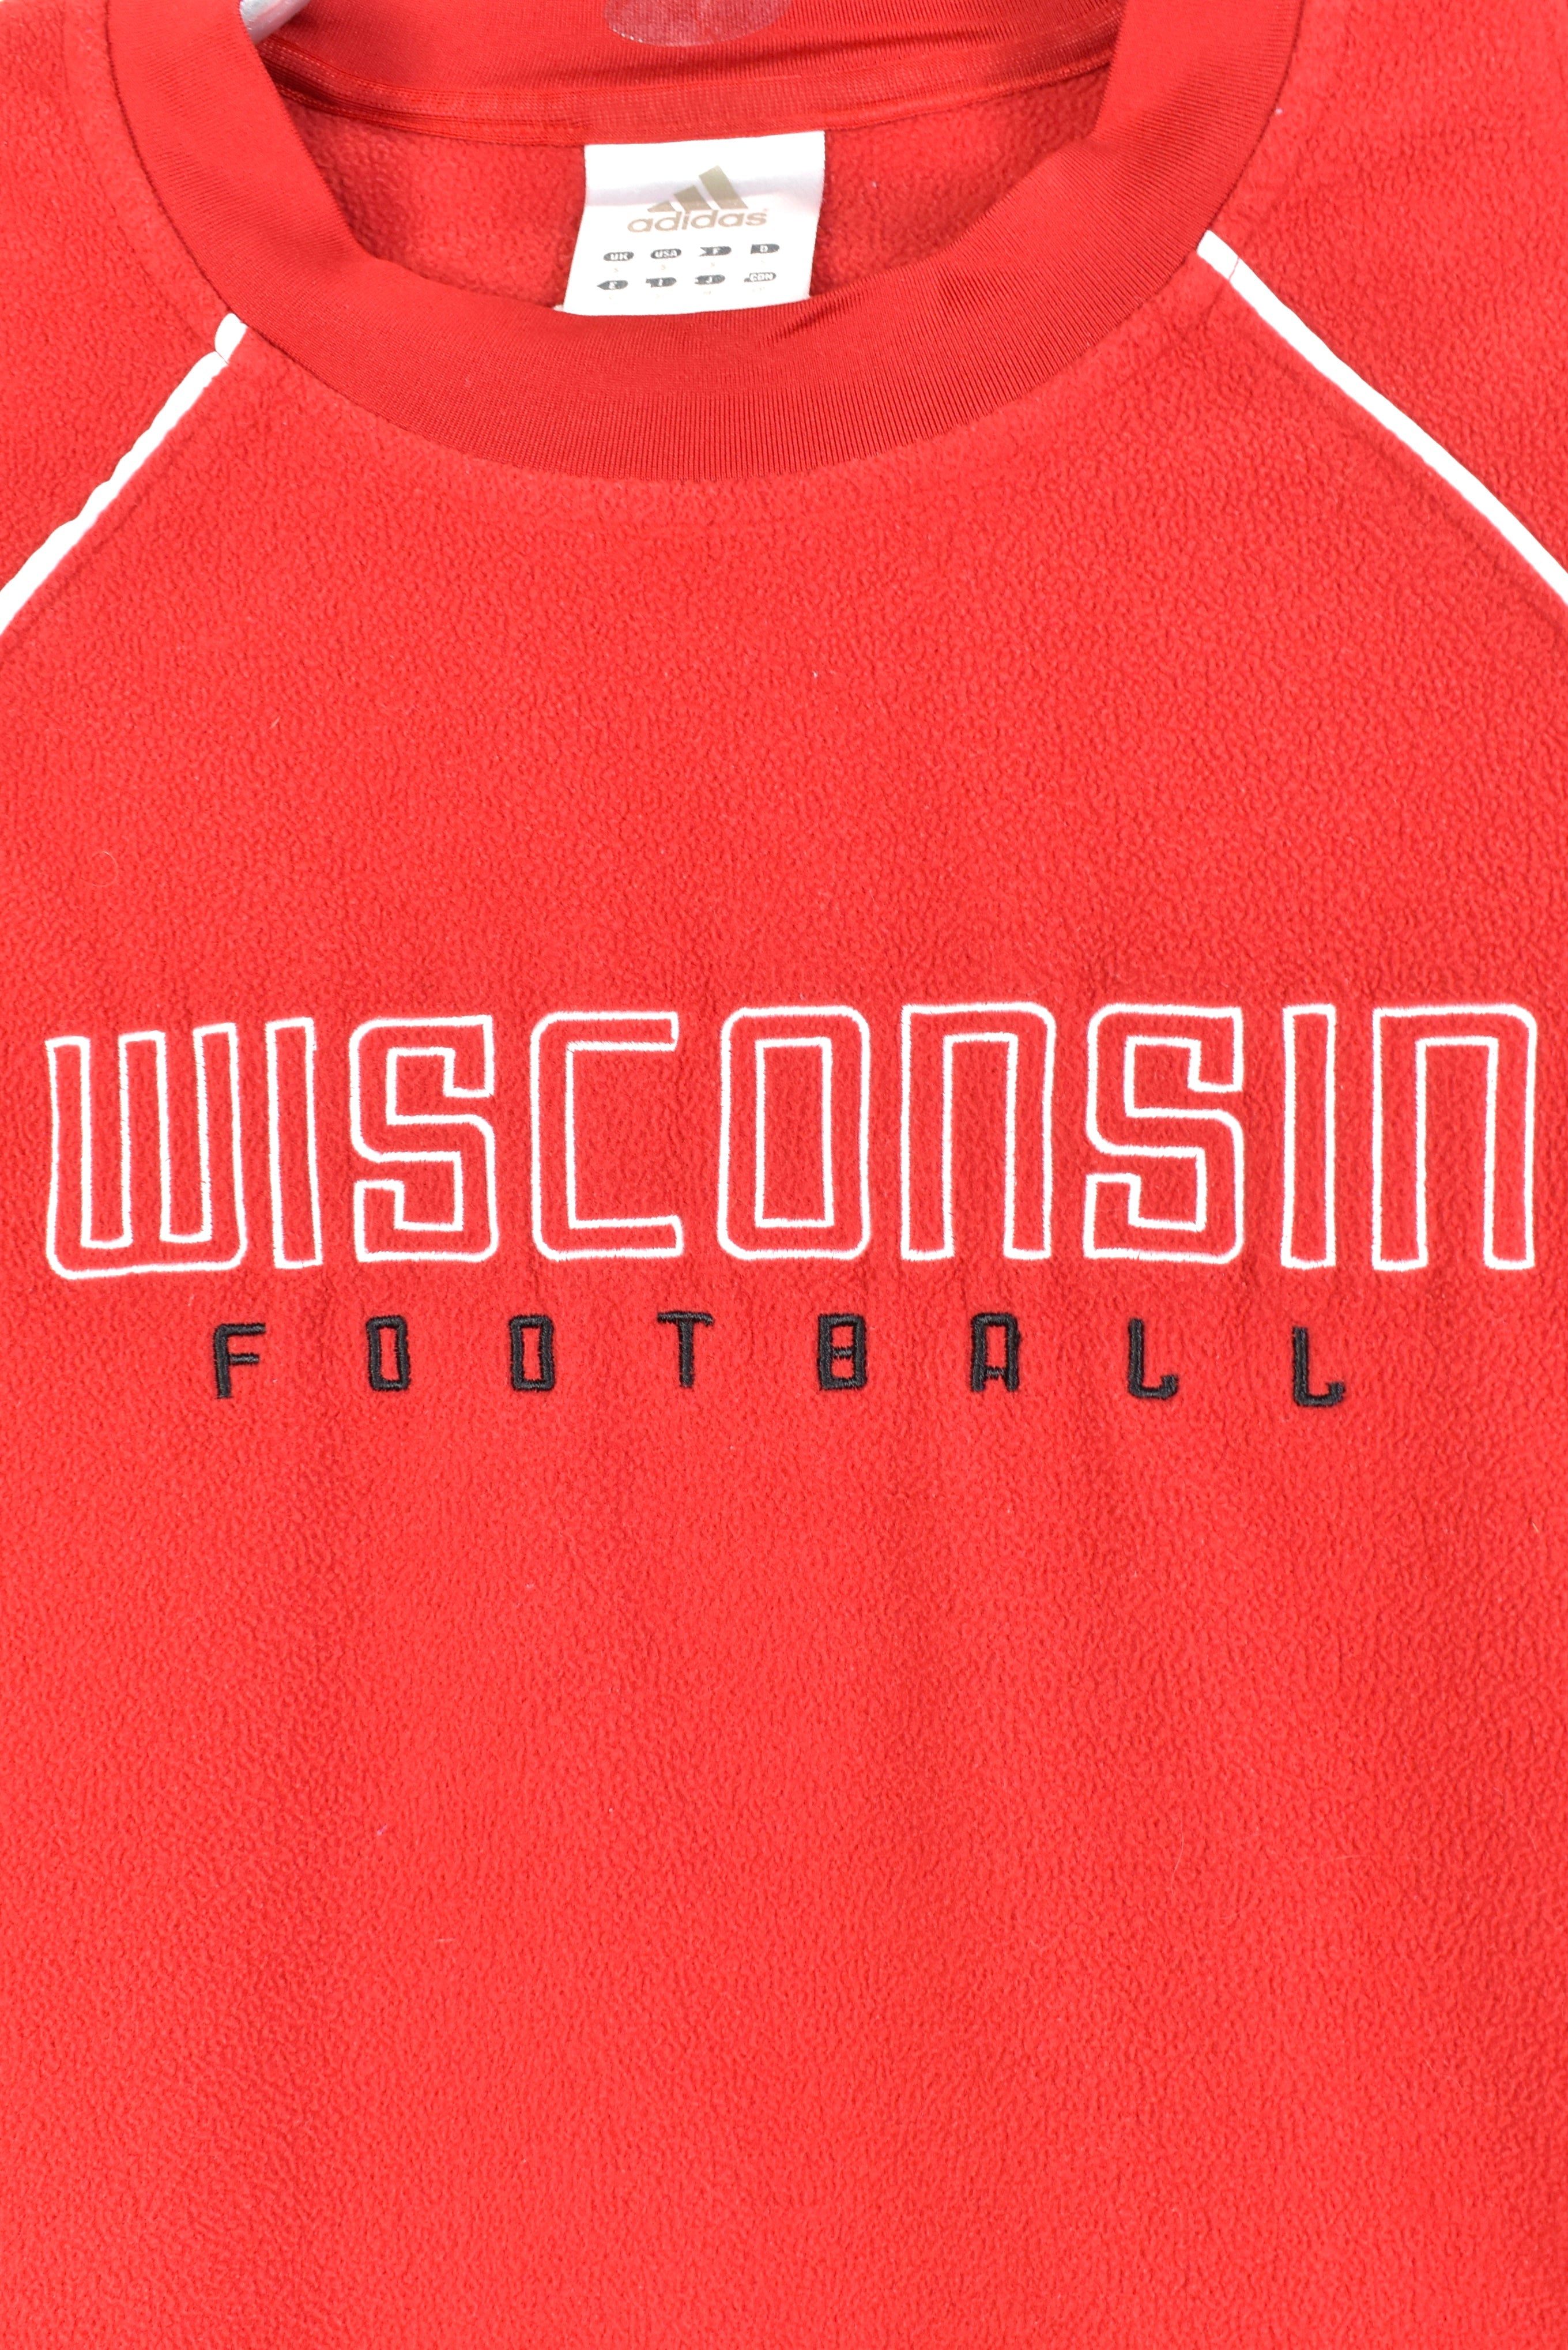 Vintage University of Wisconsin fleece, red embroidered sweatshirt - AU Medium COLLEGE